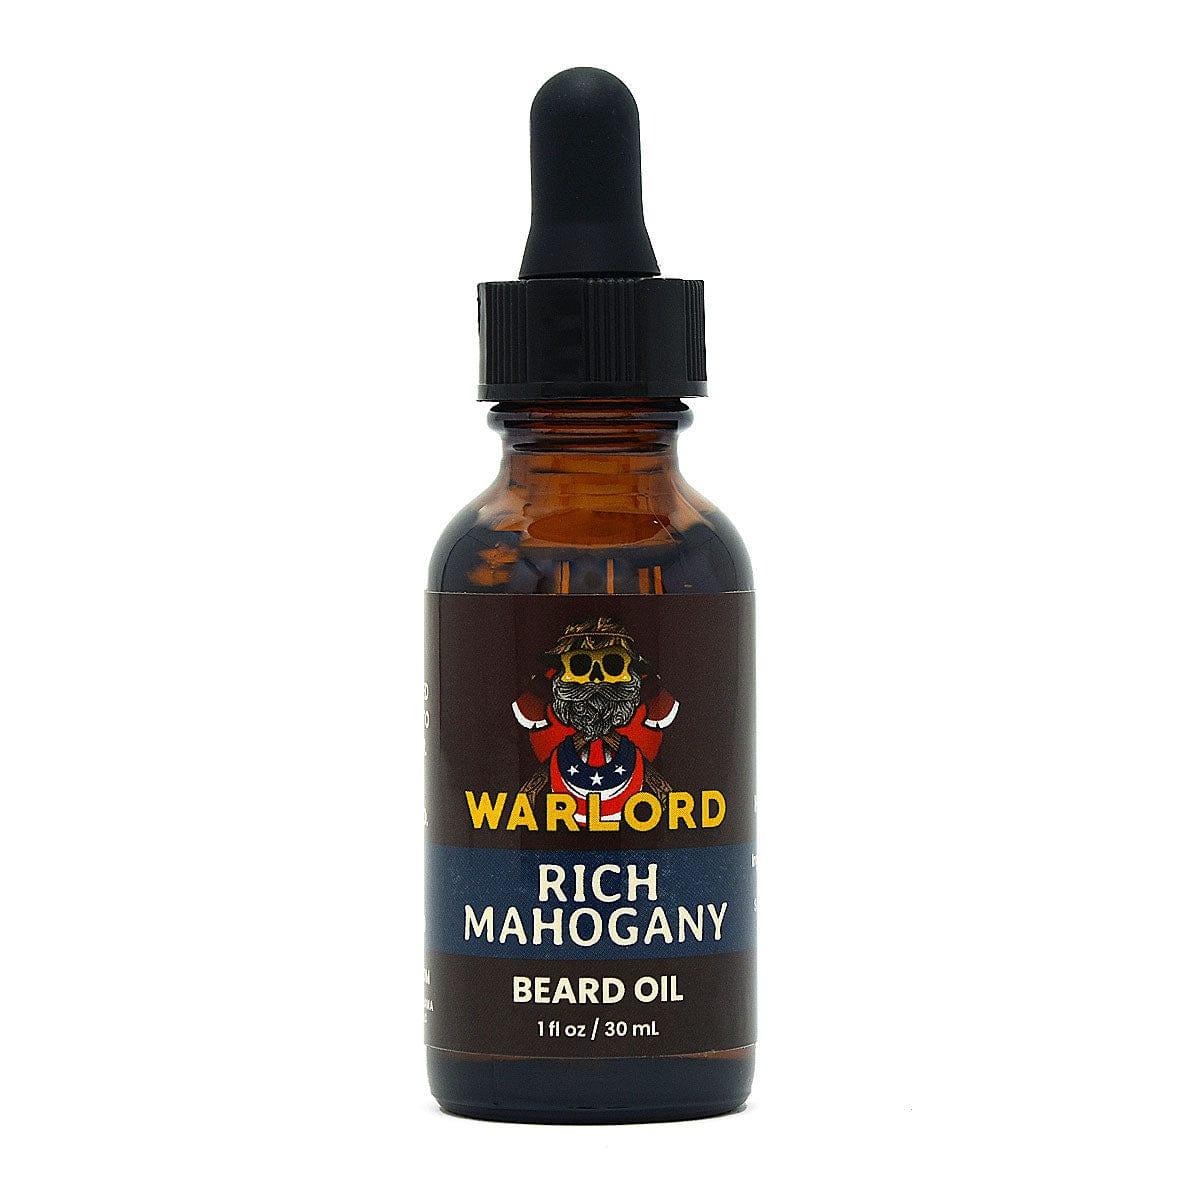 Rich Mahogany Beard Oil - Warlord - Men's Grooming Essentials